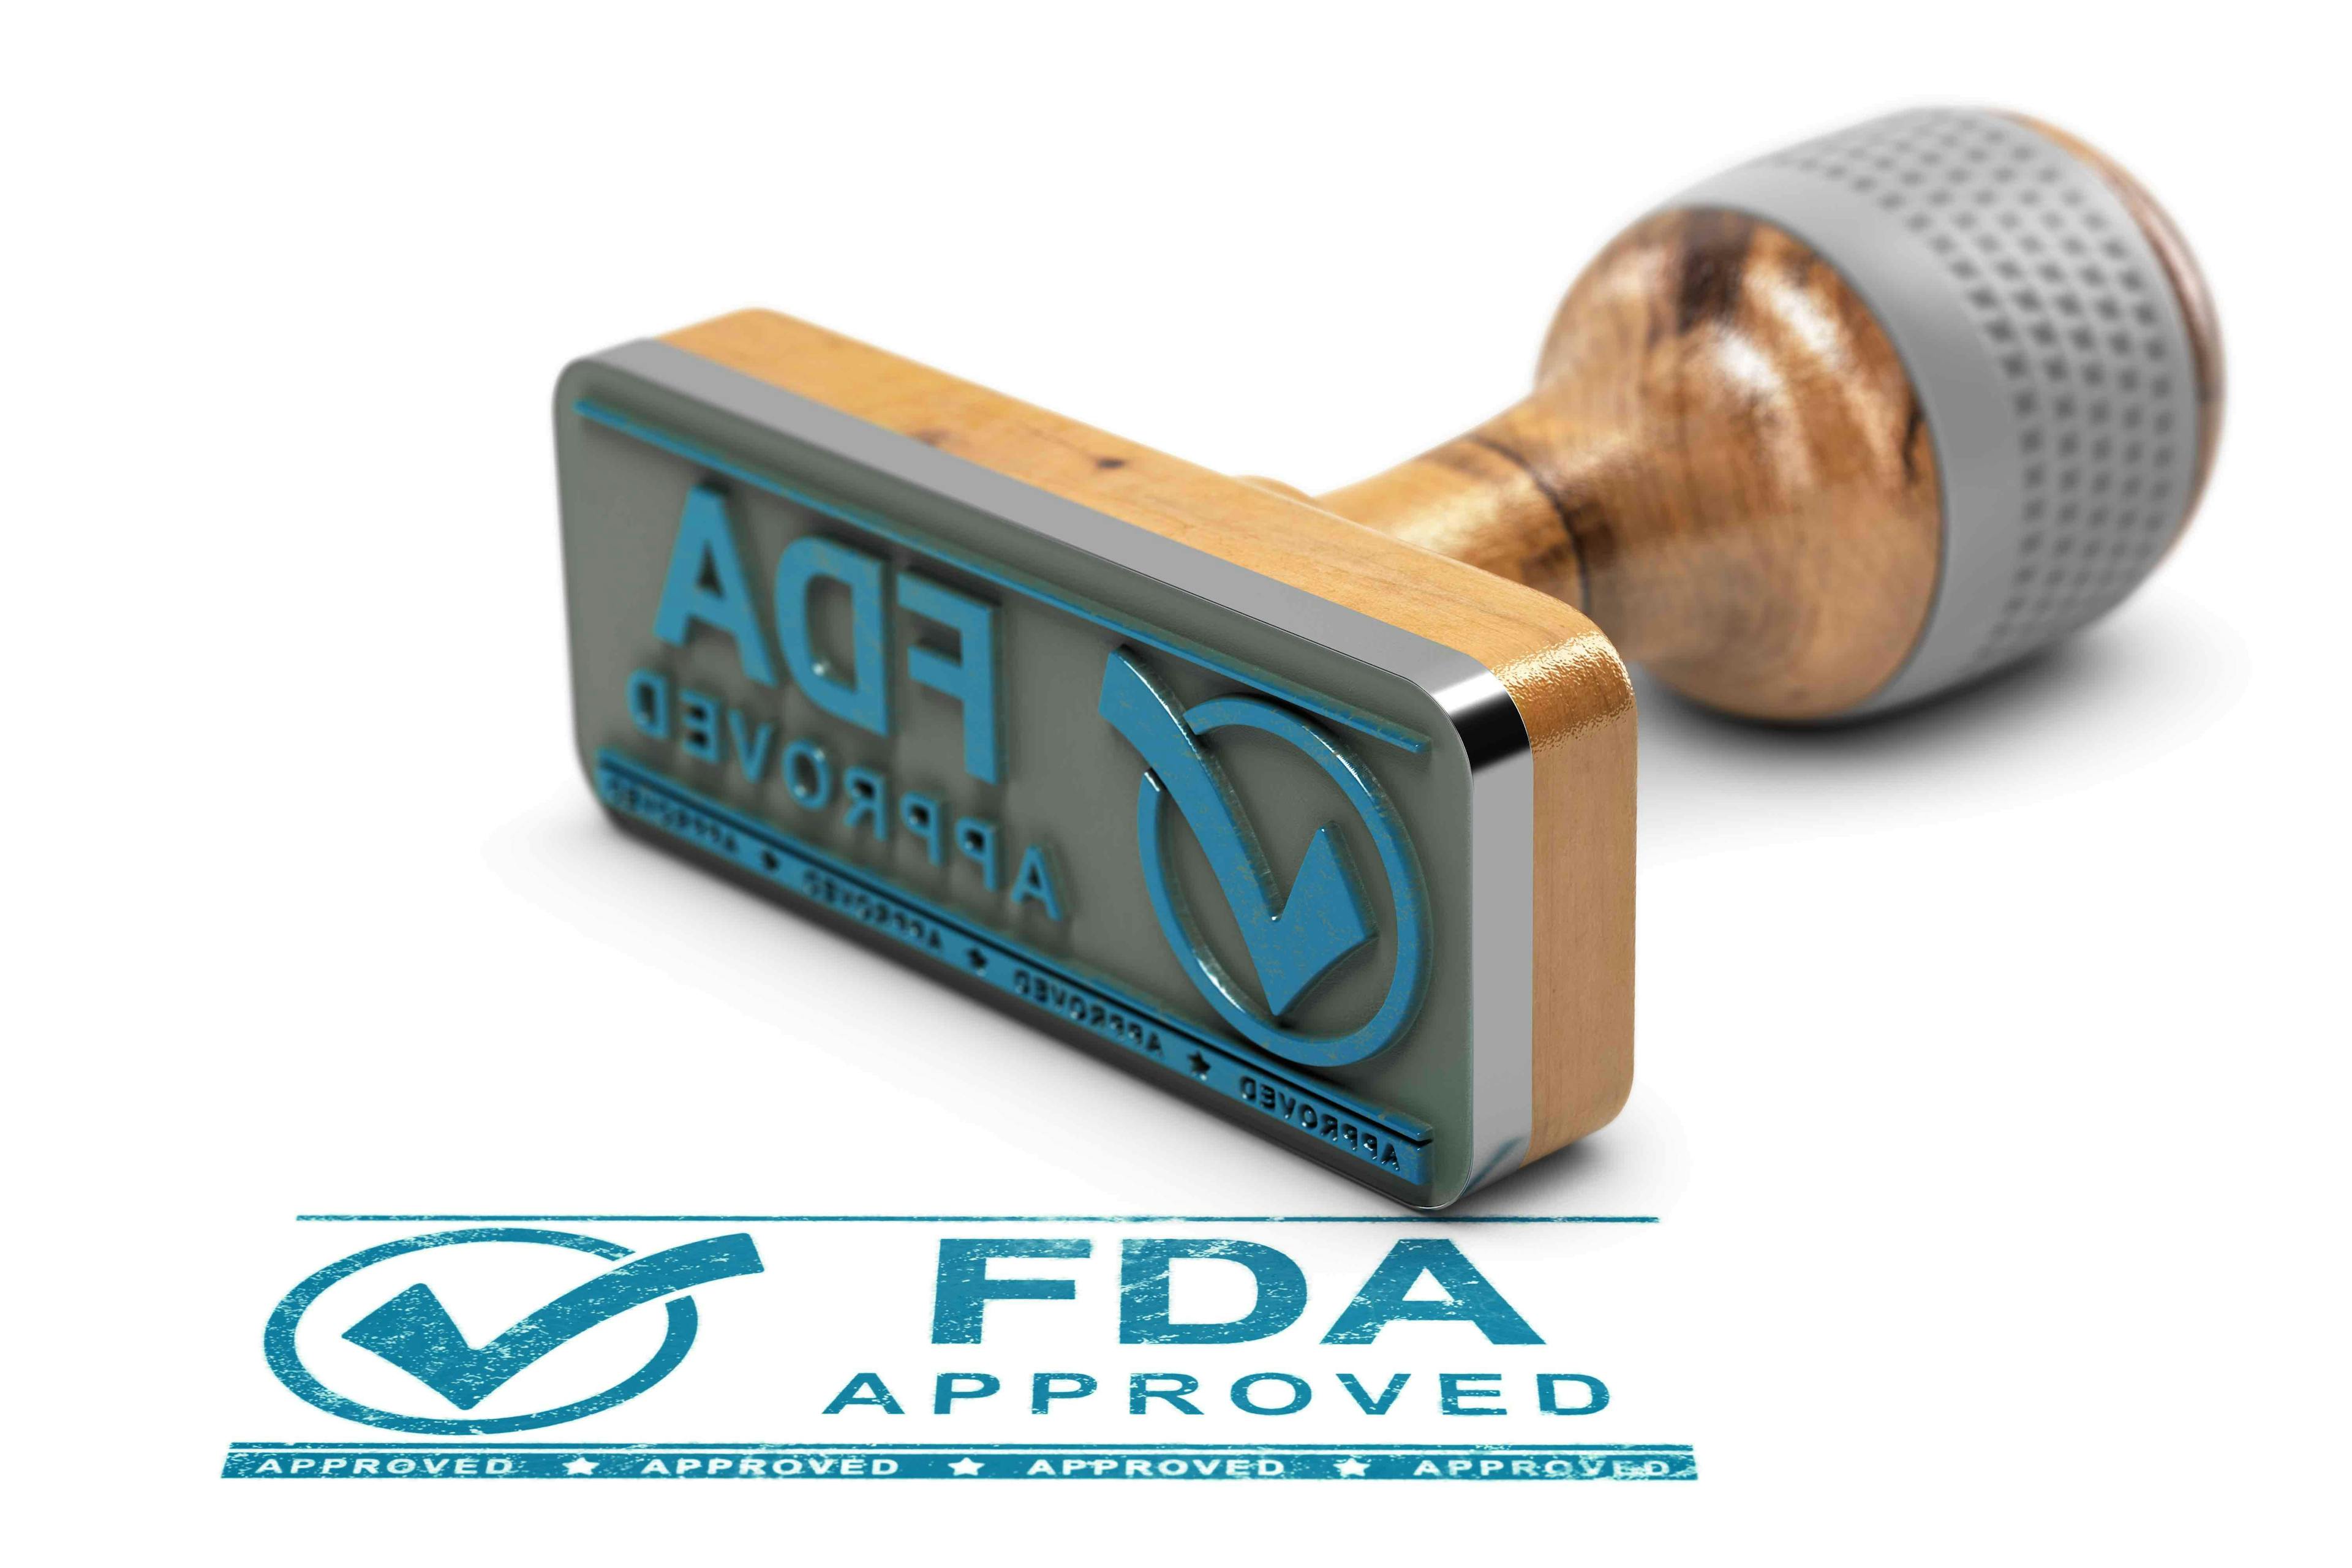 Blue FDA approved stamp on white background | Image credit: Olivier Le Moal - stock.adobe.com